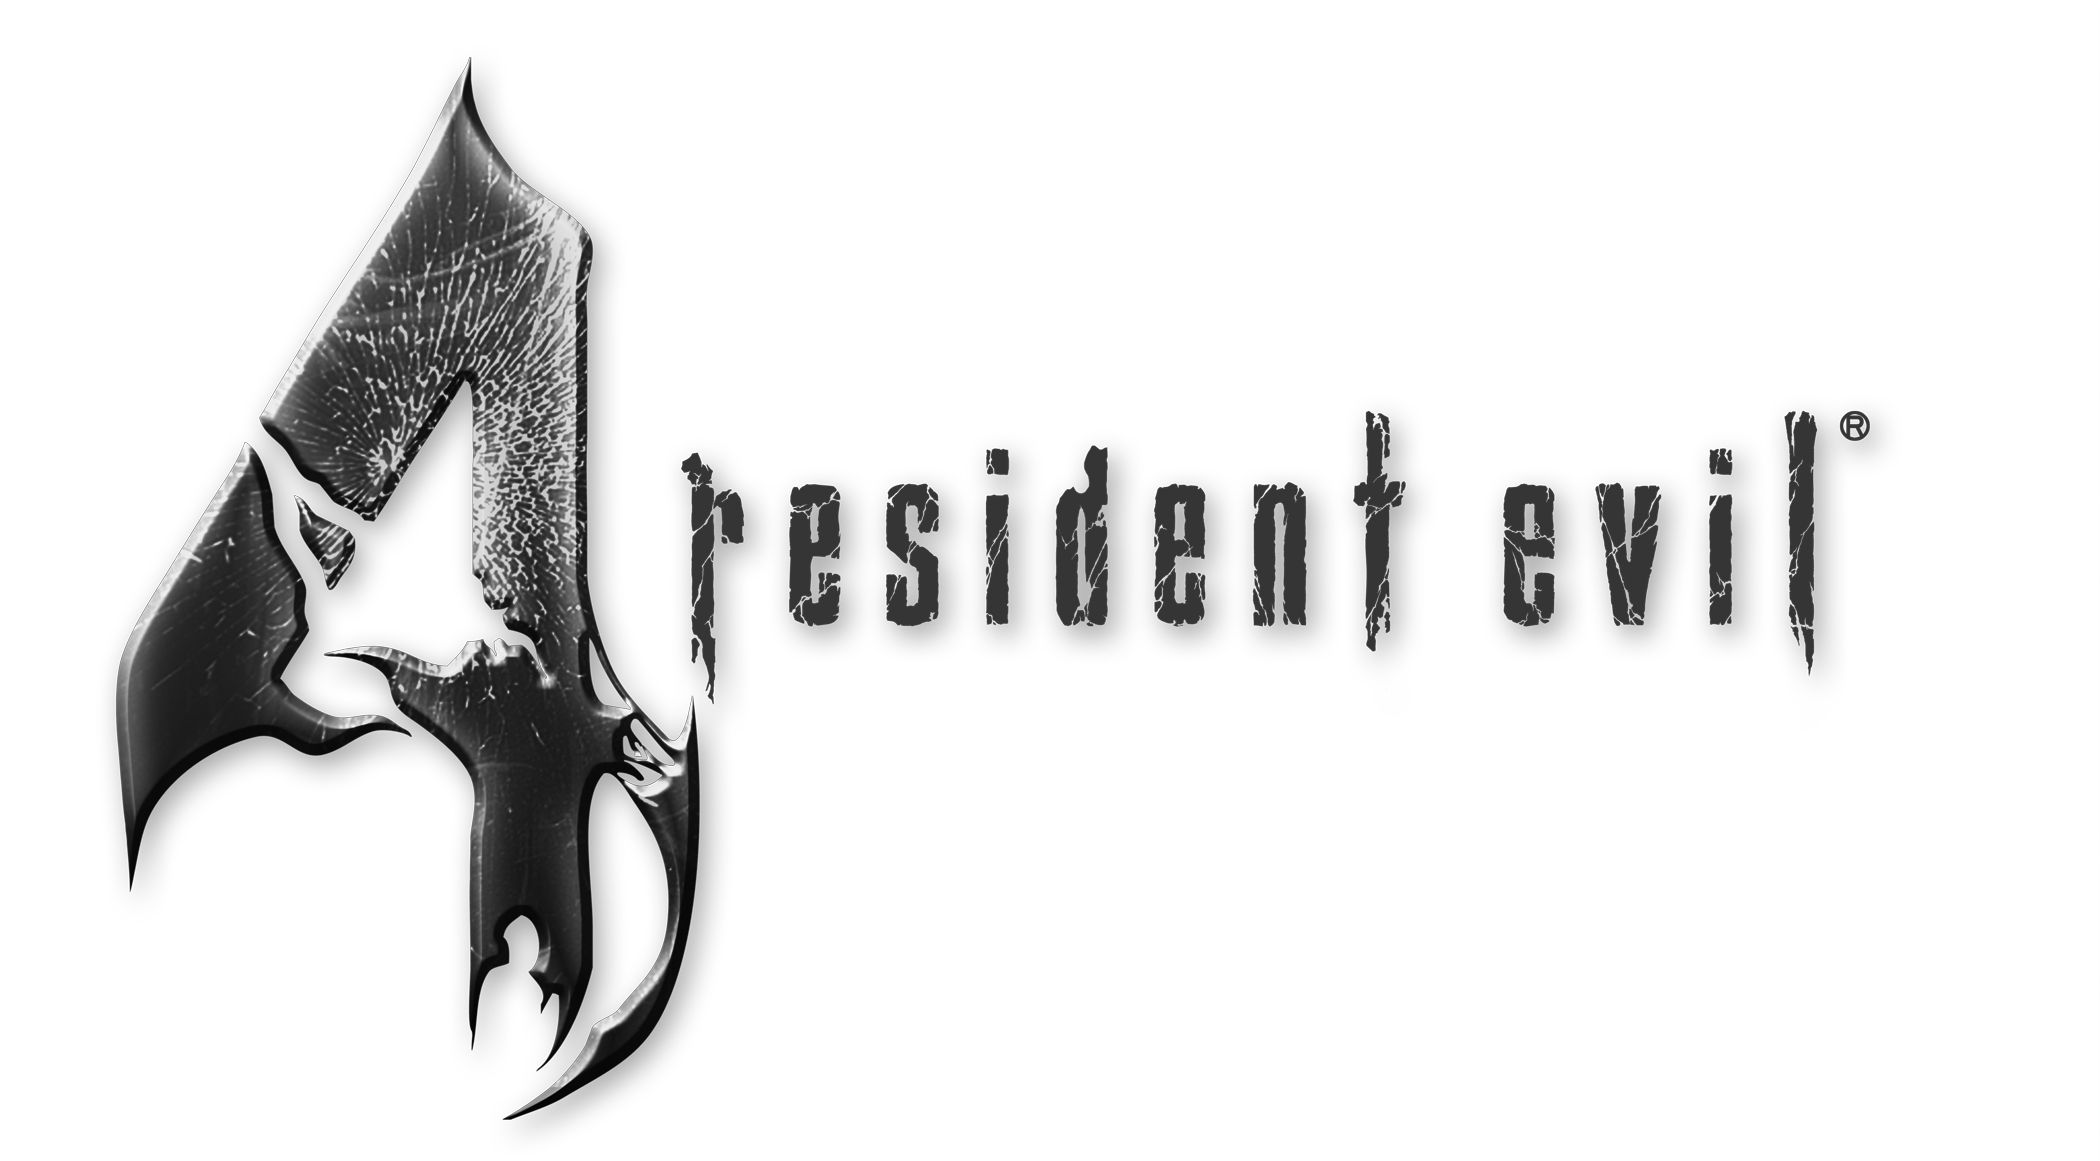 Resident Evil 4 2014 Ultimate HD Edition Reloaded skidrow reloaded